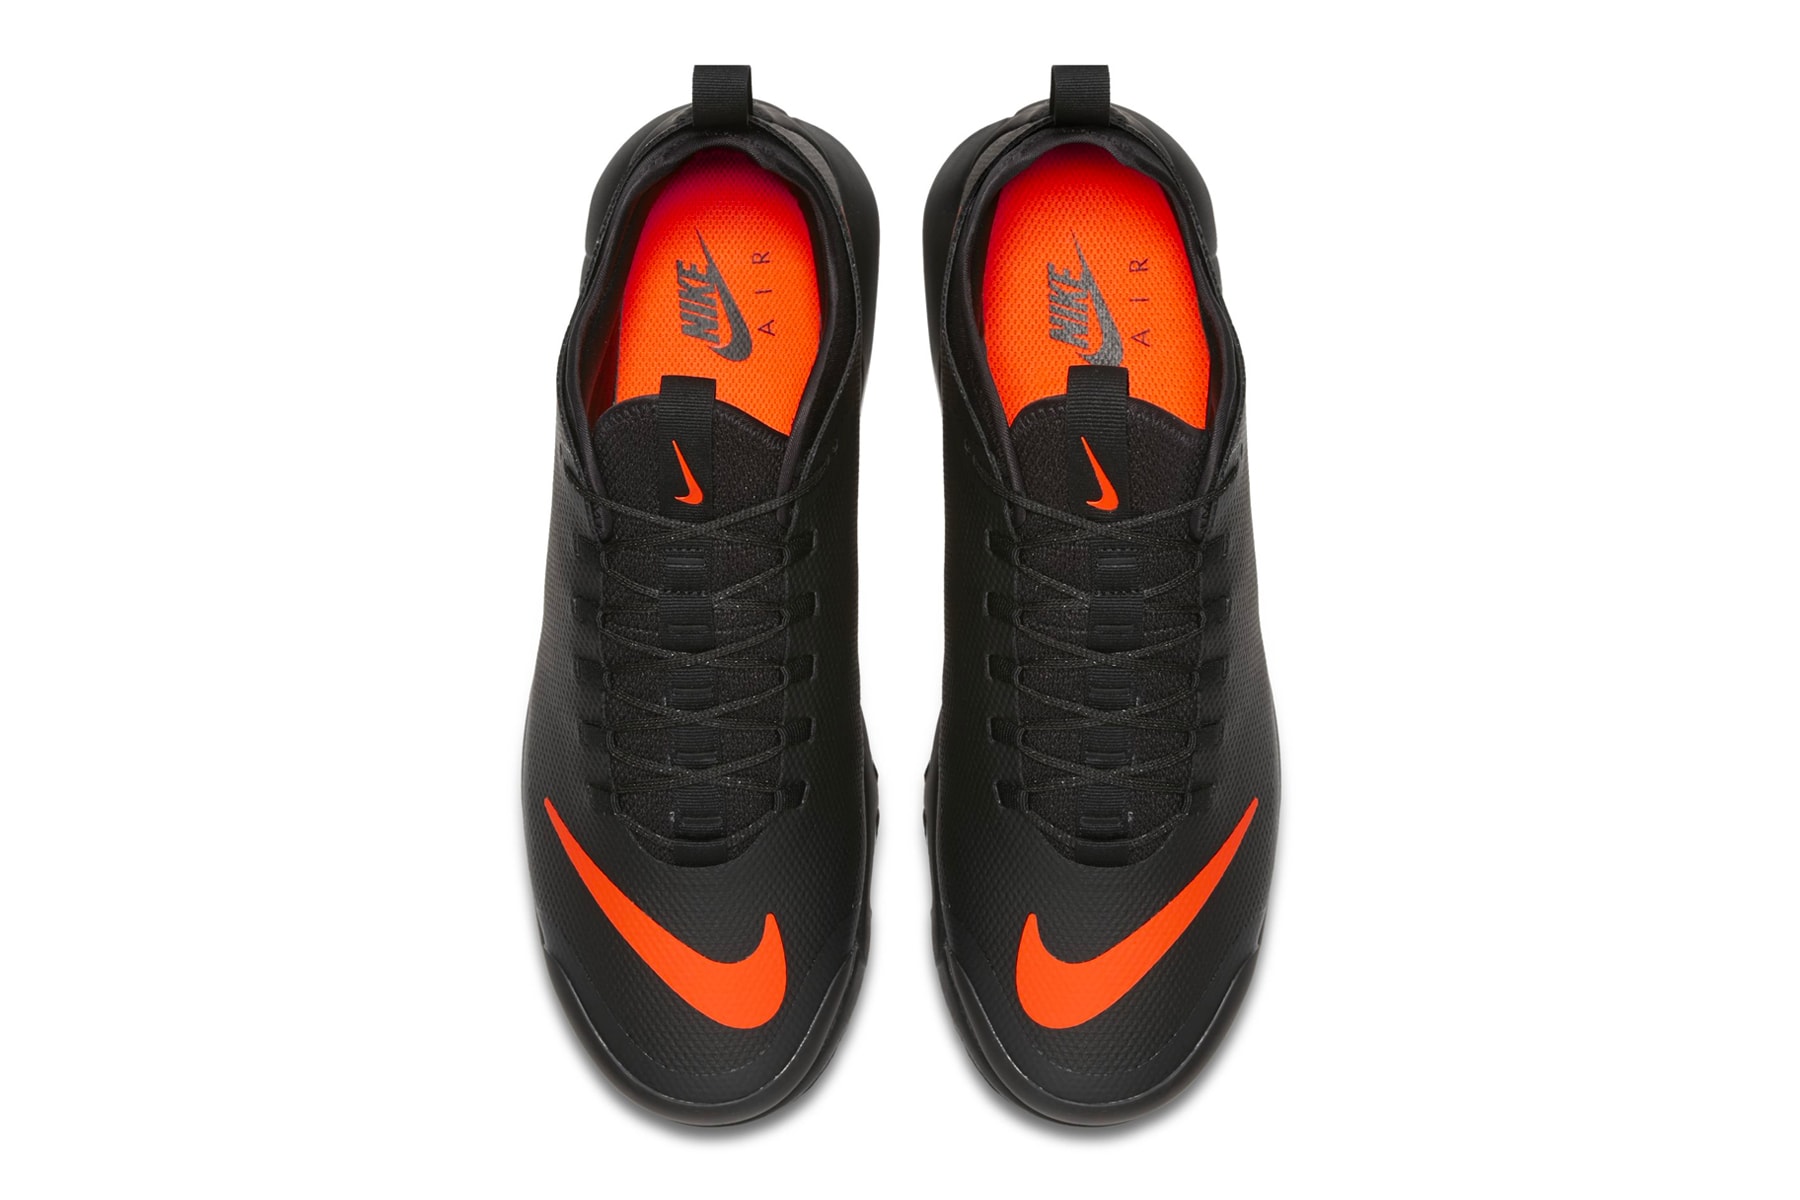 Nike Air Max Plus Tn SE Black Orange release date price purchase first look 2018 sneaker